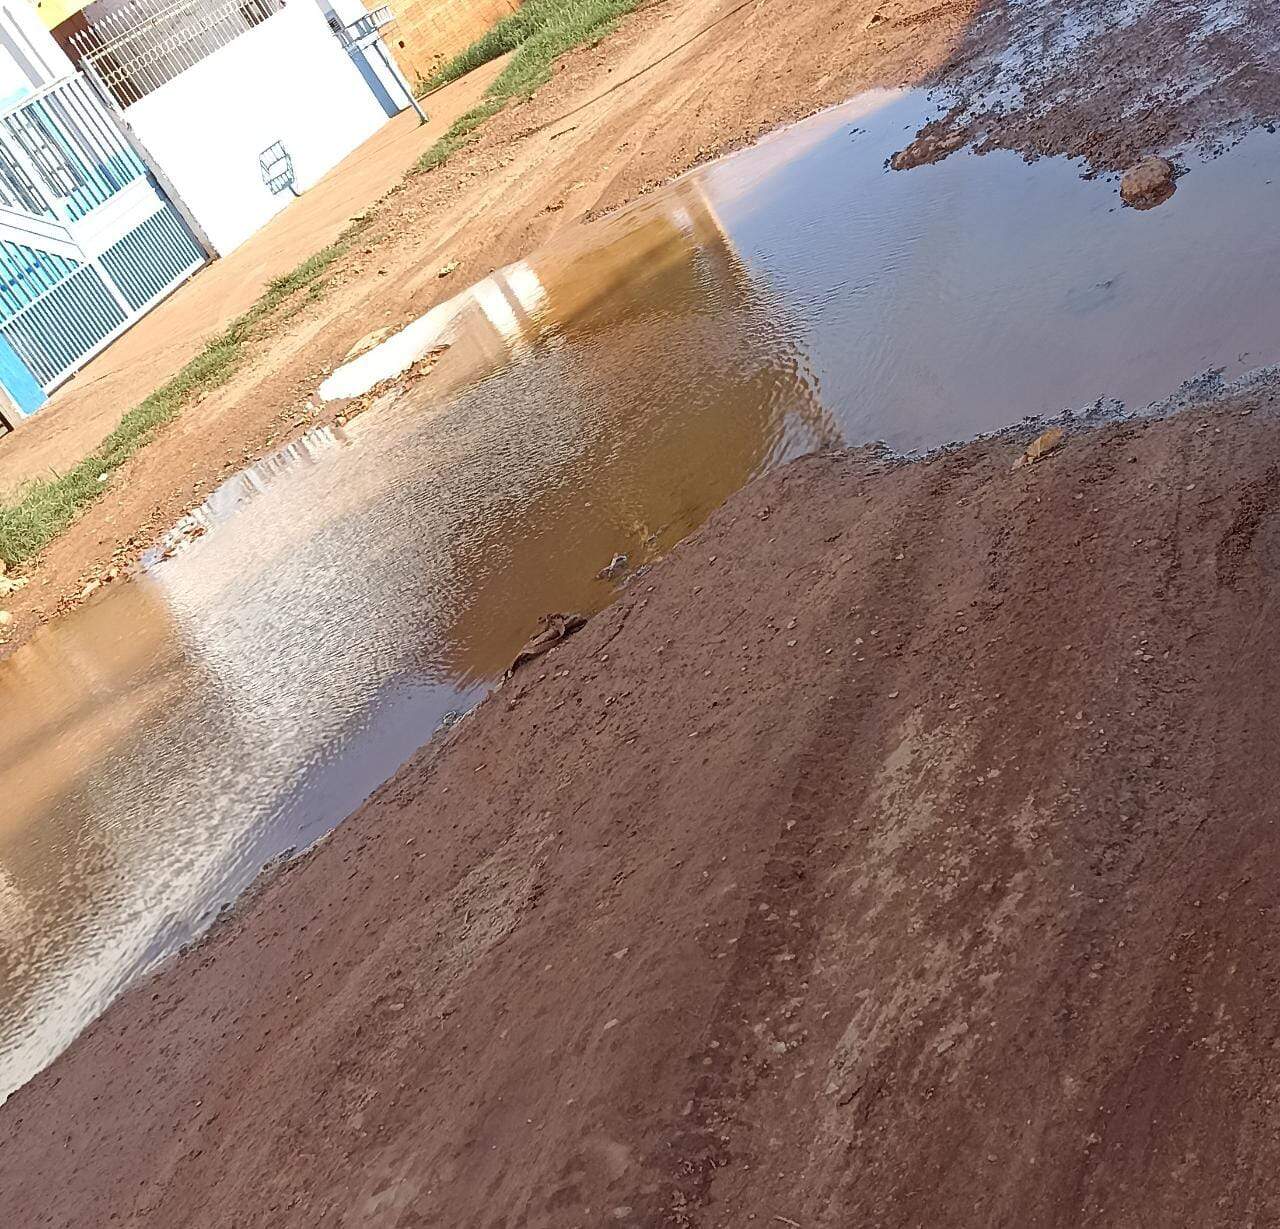 whatsapp image 2022 02 04 at 16.45.43 - Rua enche de lama e dificulta passagem de motoristas no bairro Caiobá